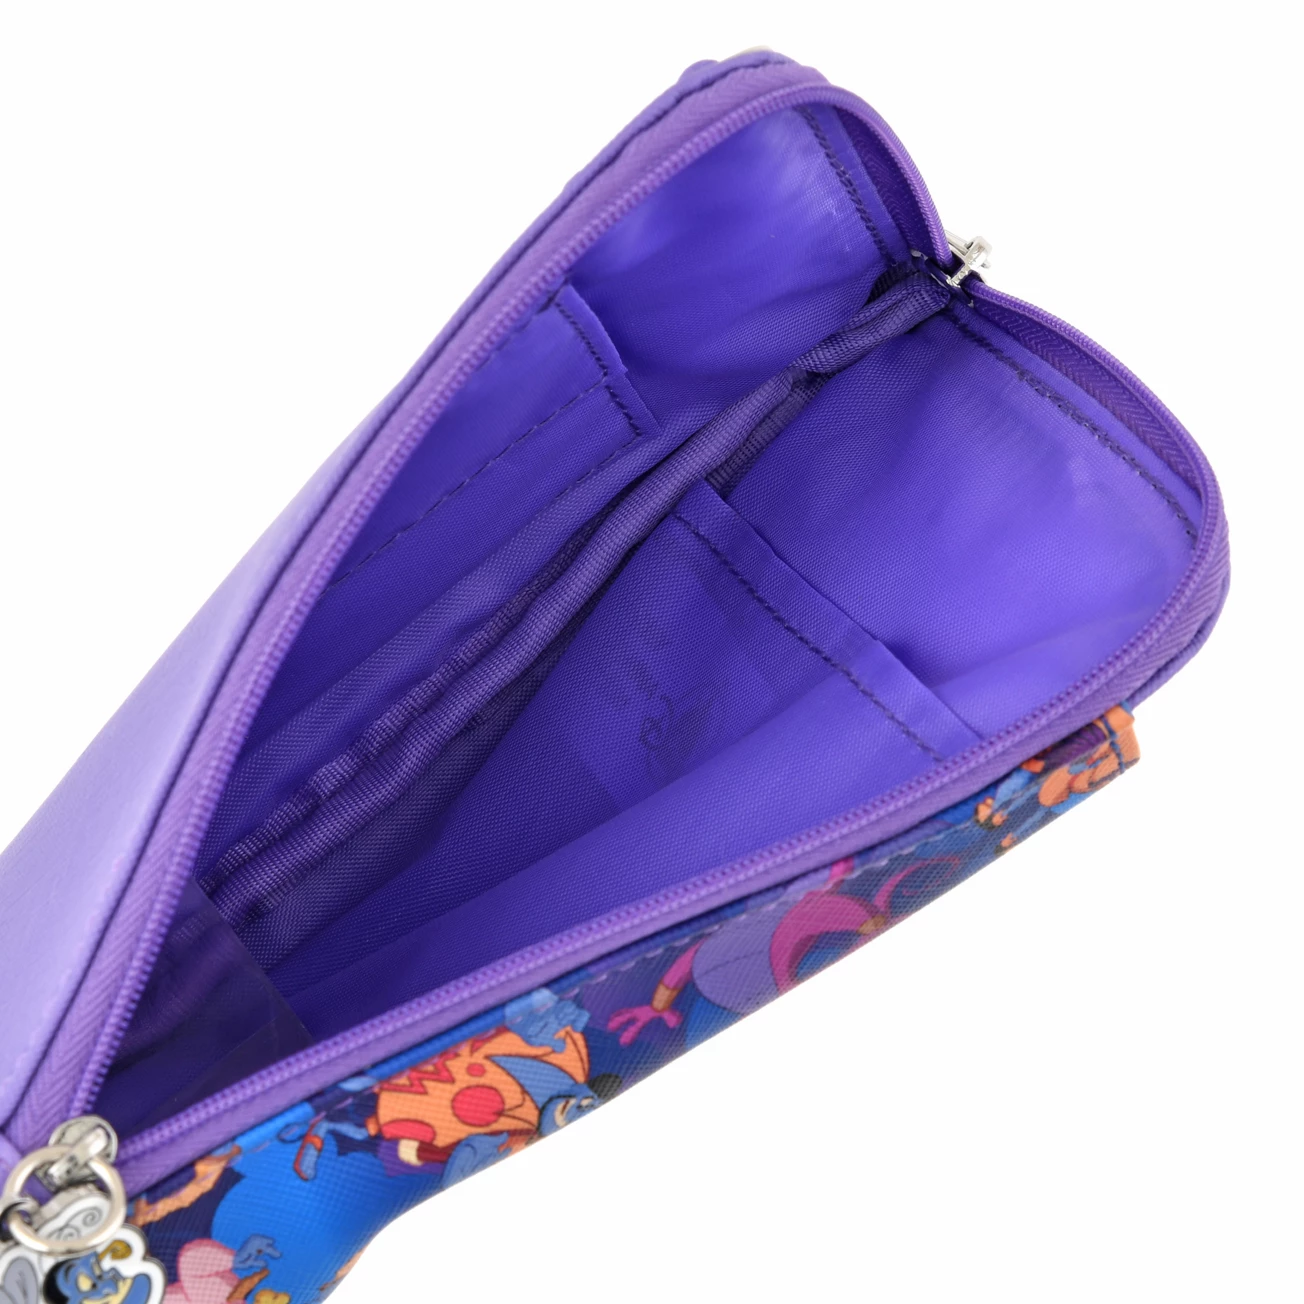 SDJ - Aladdin 30th Anniversary Collection - Cell phone bag